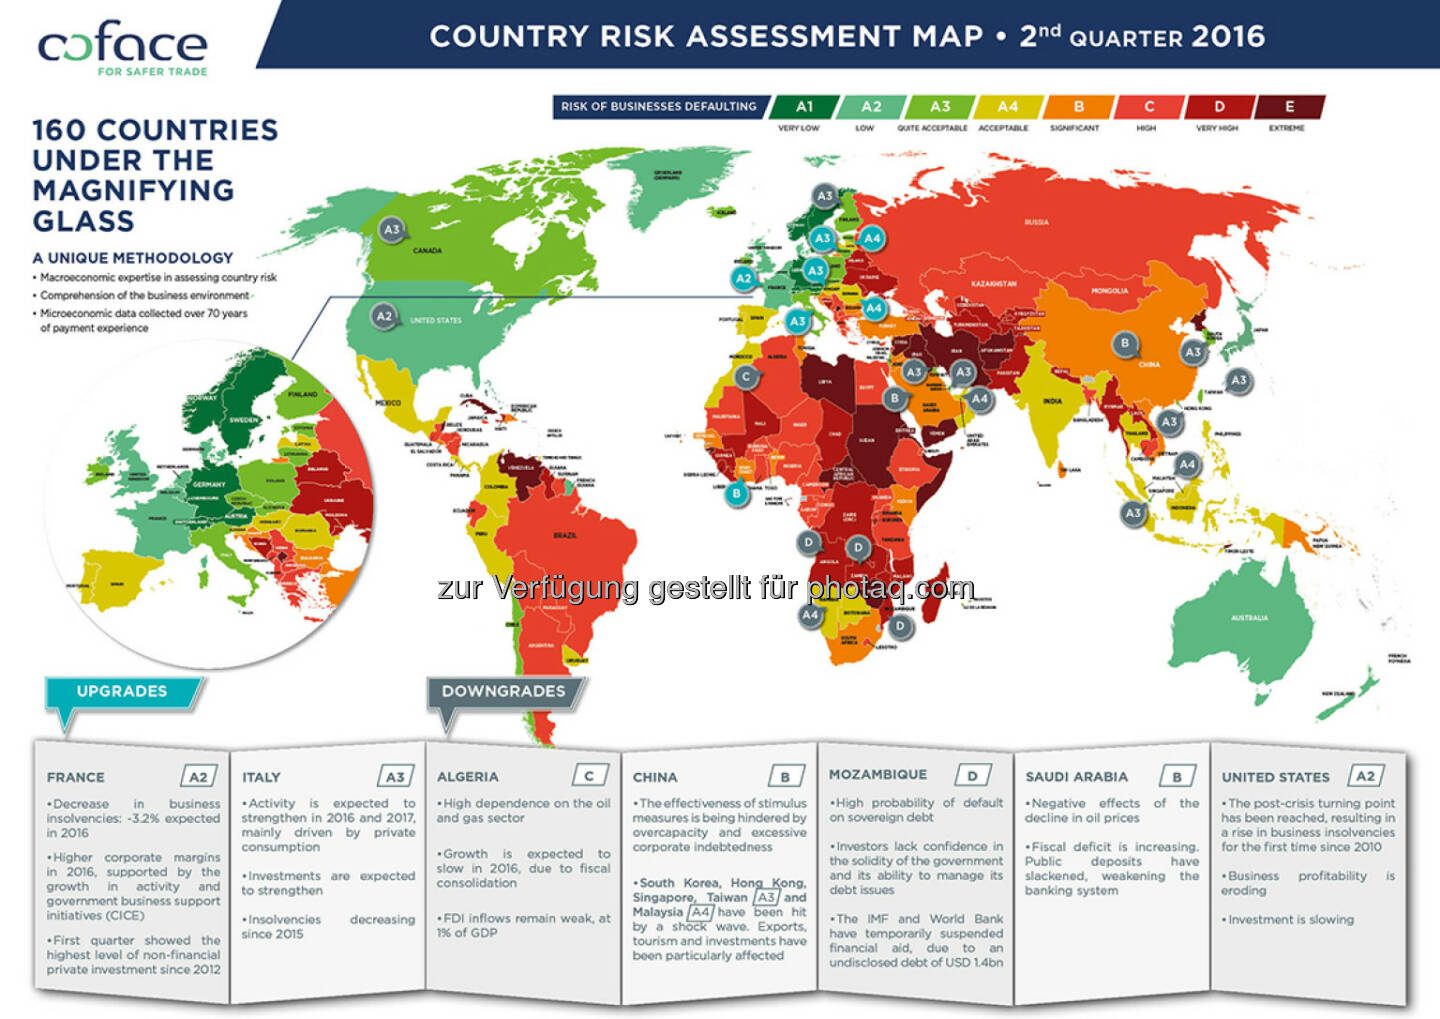 Country Risk Assessment Map Q2 2016 : Risiken weltweit auf Höchststand : Fotocredit: Coface